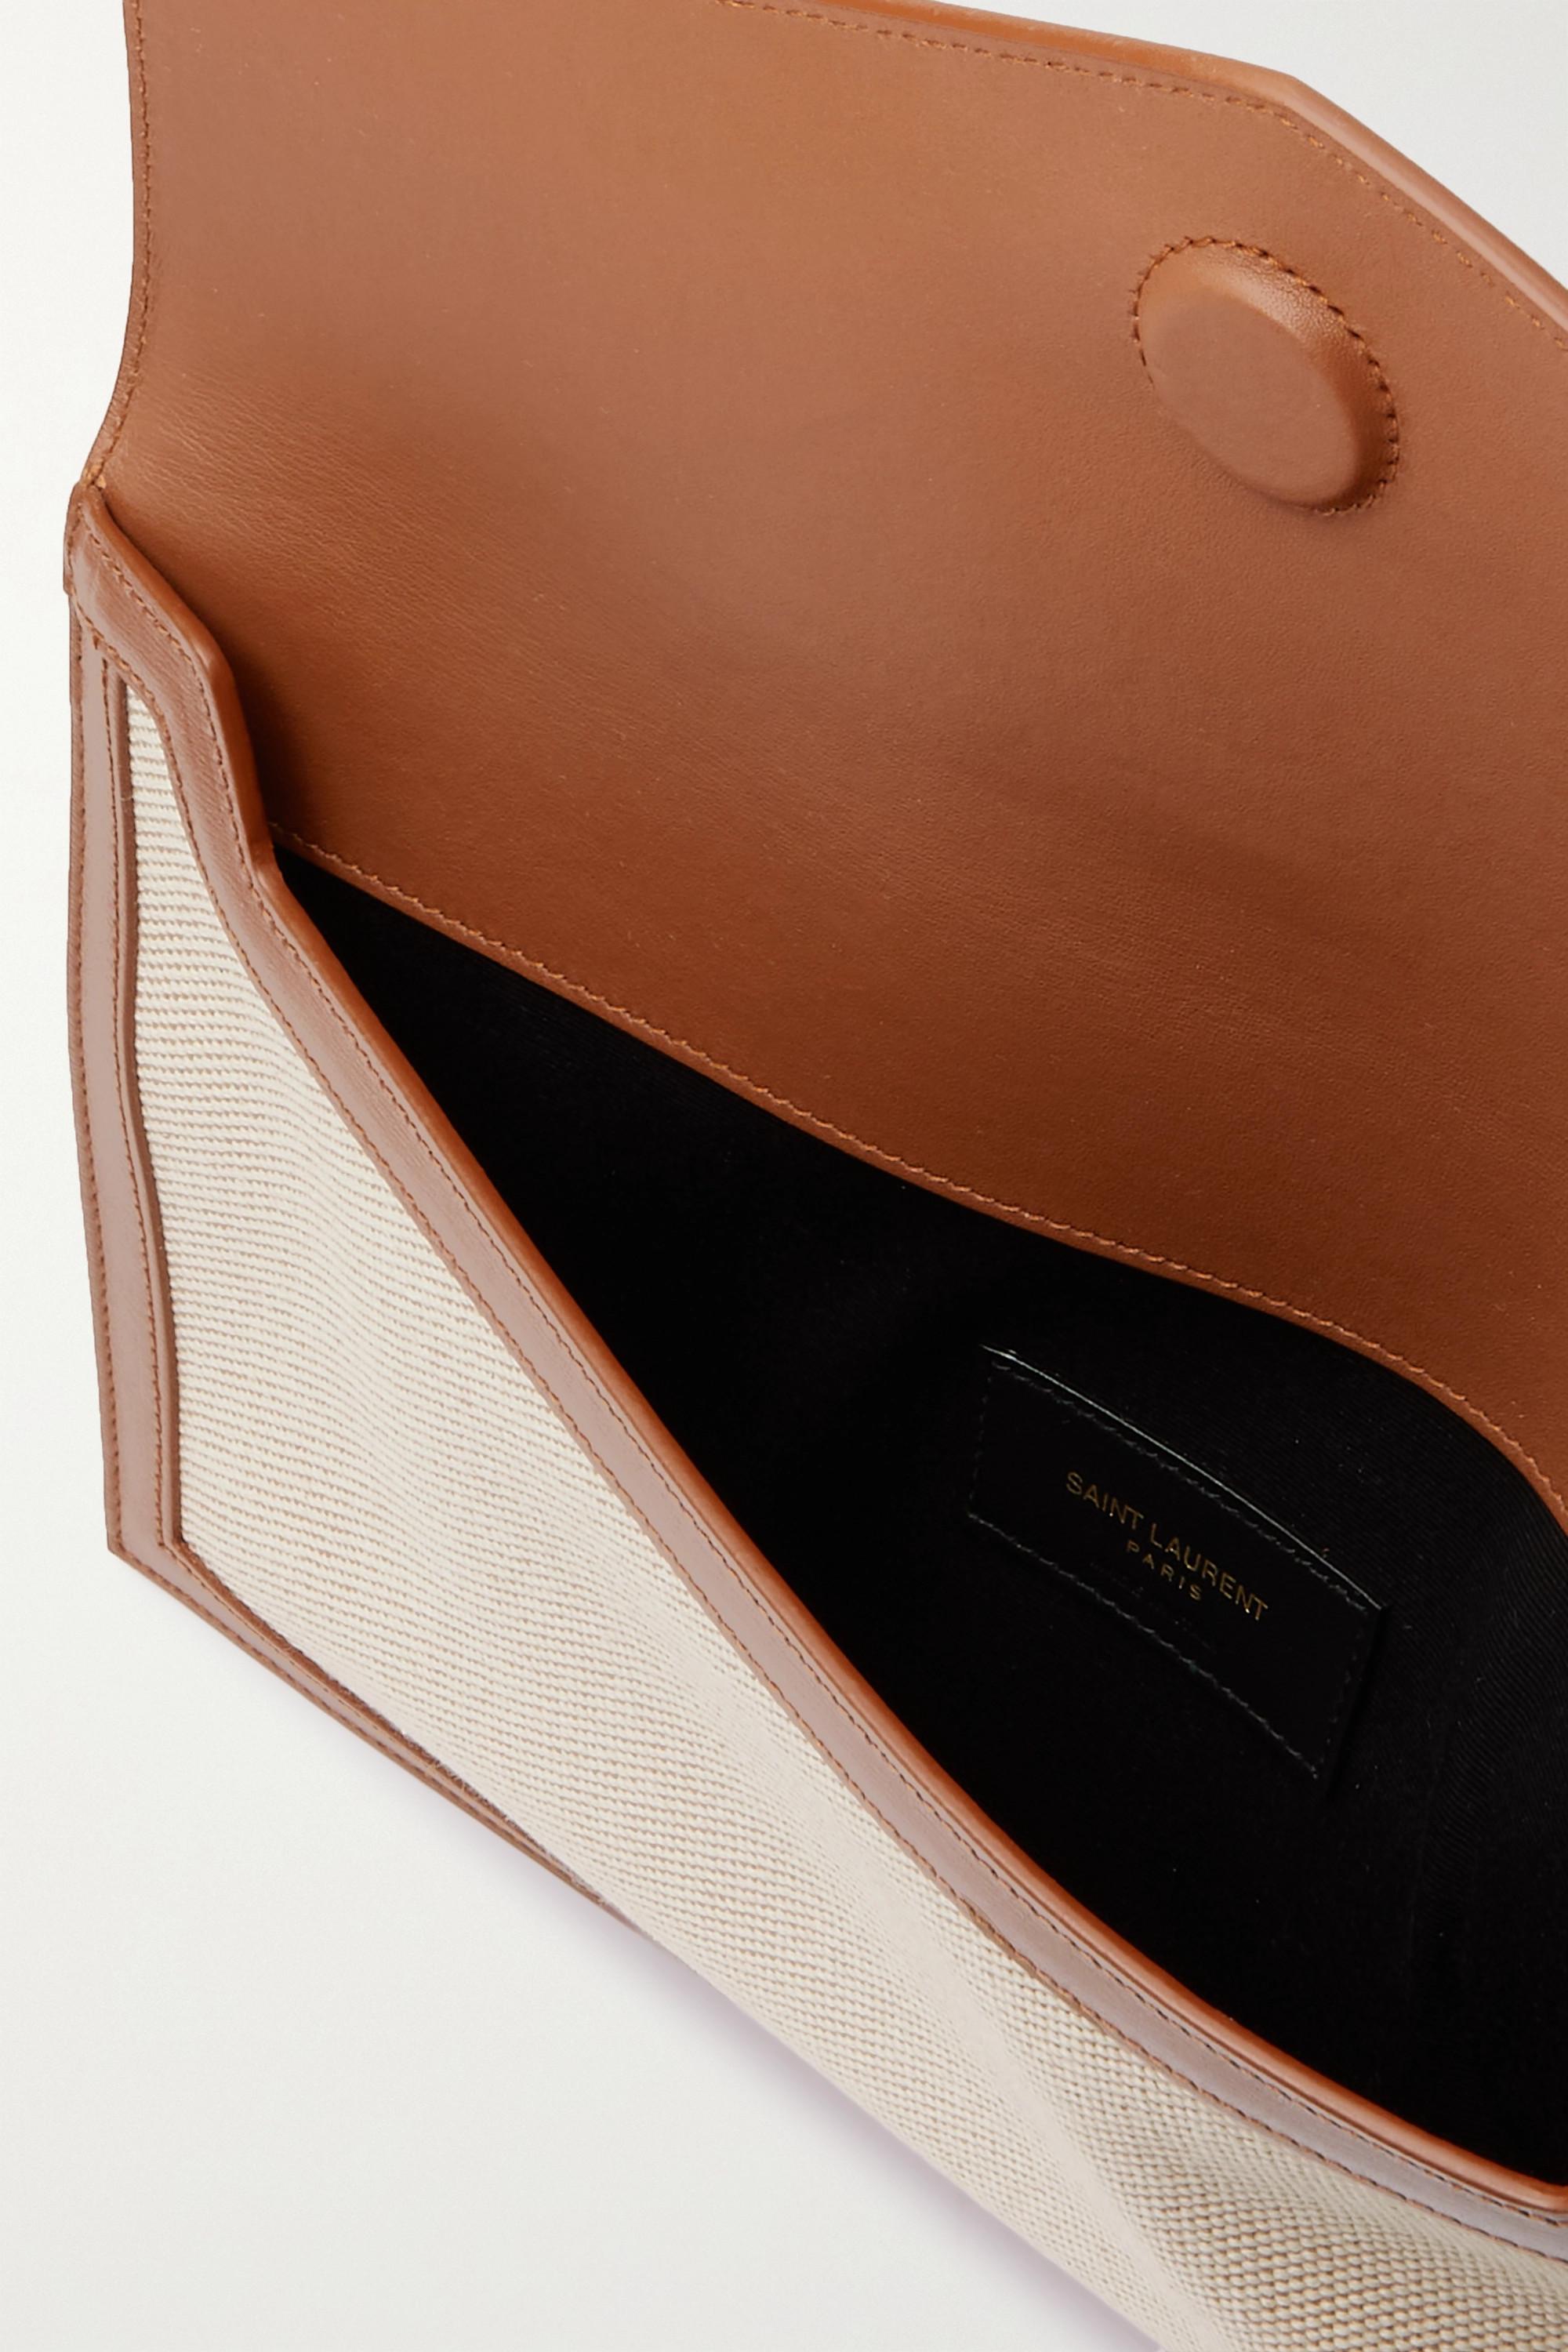 Saint Laurent Uptown Textured-leather Pouch - Beige - One Size